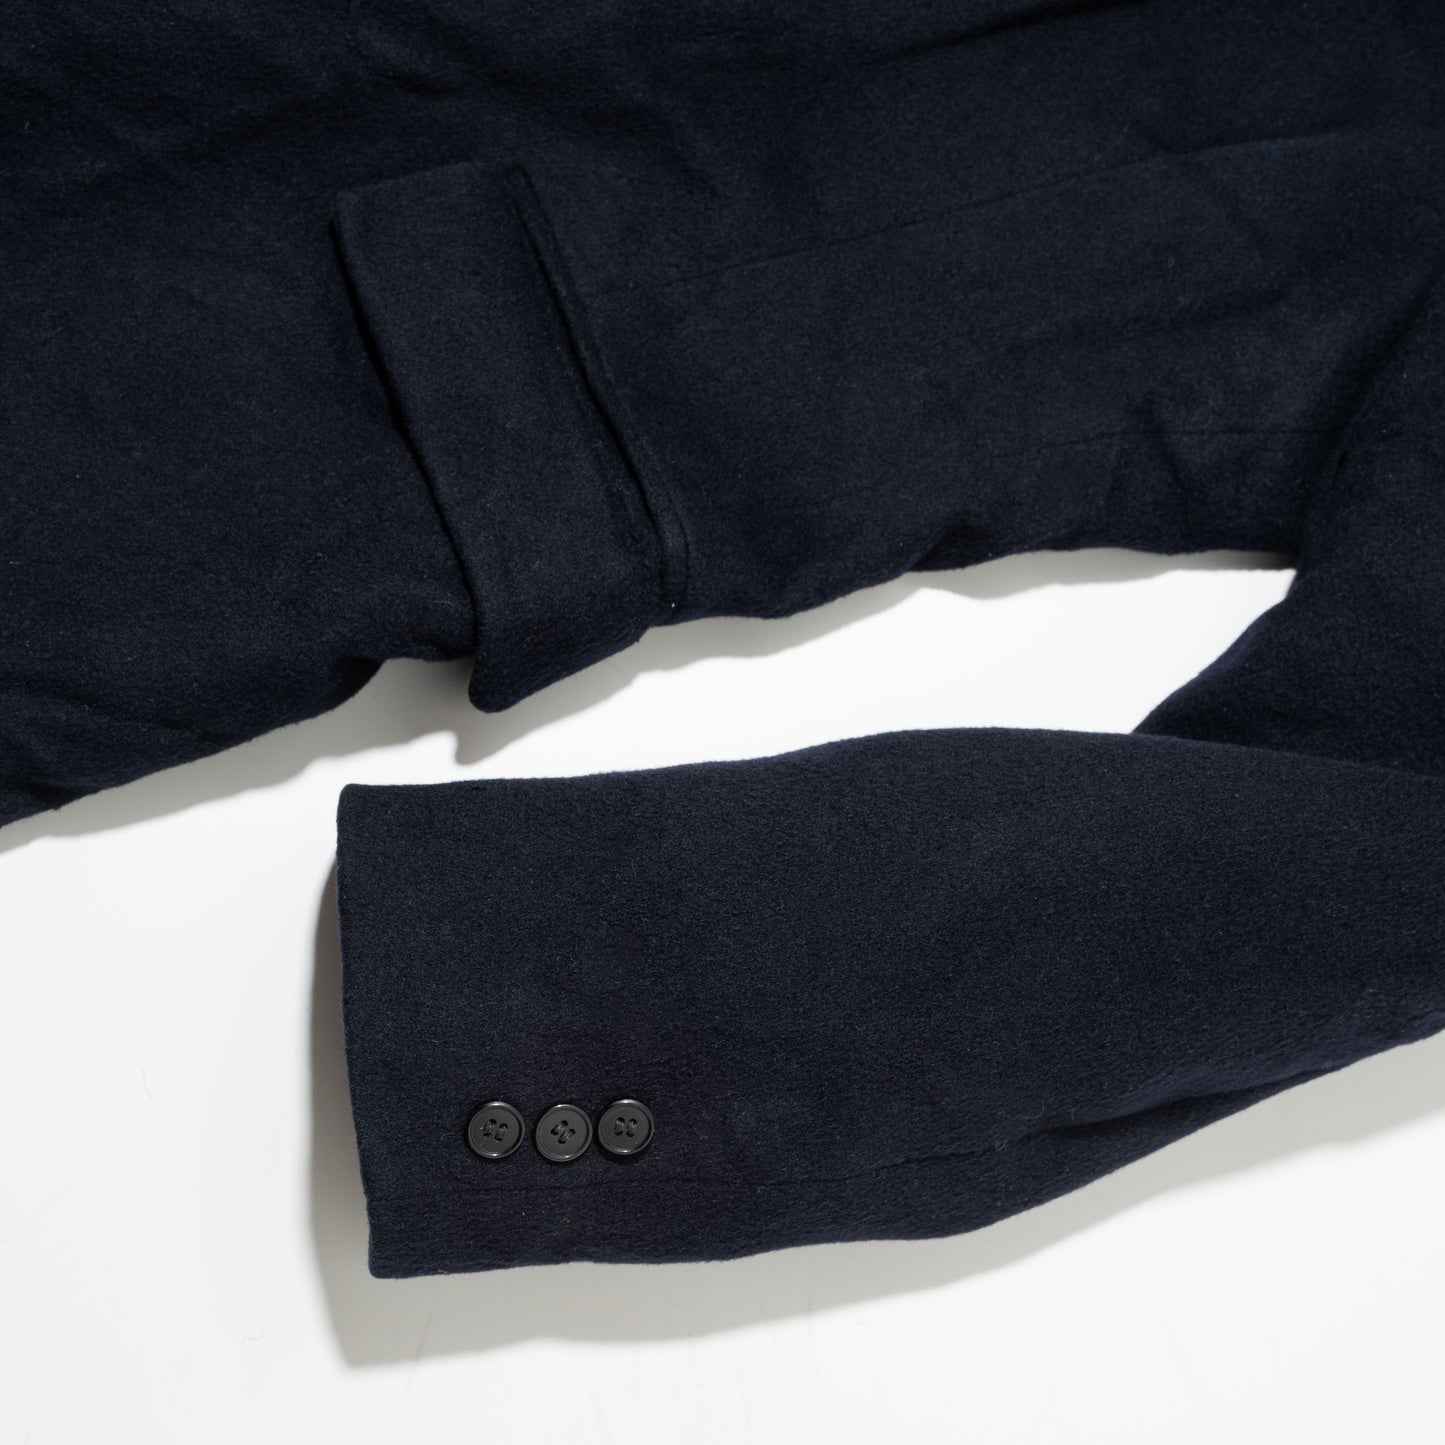 vintage 80's Yves Saint Laurent wool double breasted coat